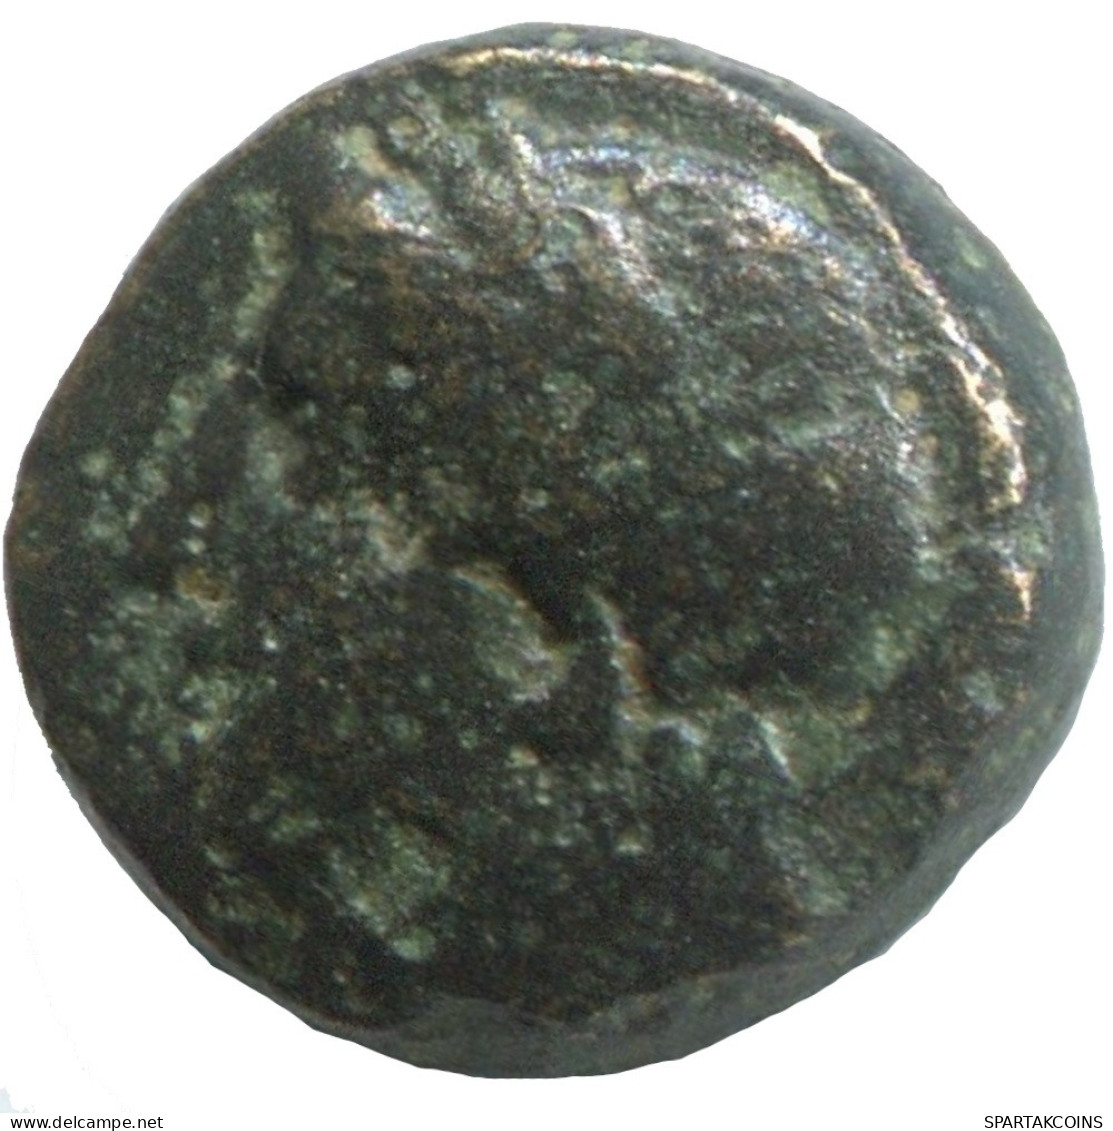 Ancient Antike Authentische Original GRIECHISCHE Münze 1.3g/10mm #SAV1319.11.D.A - Griekenland